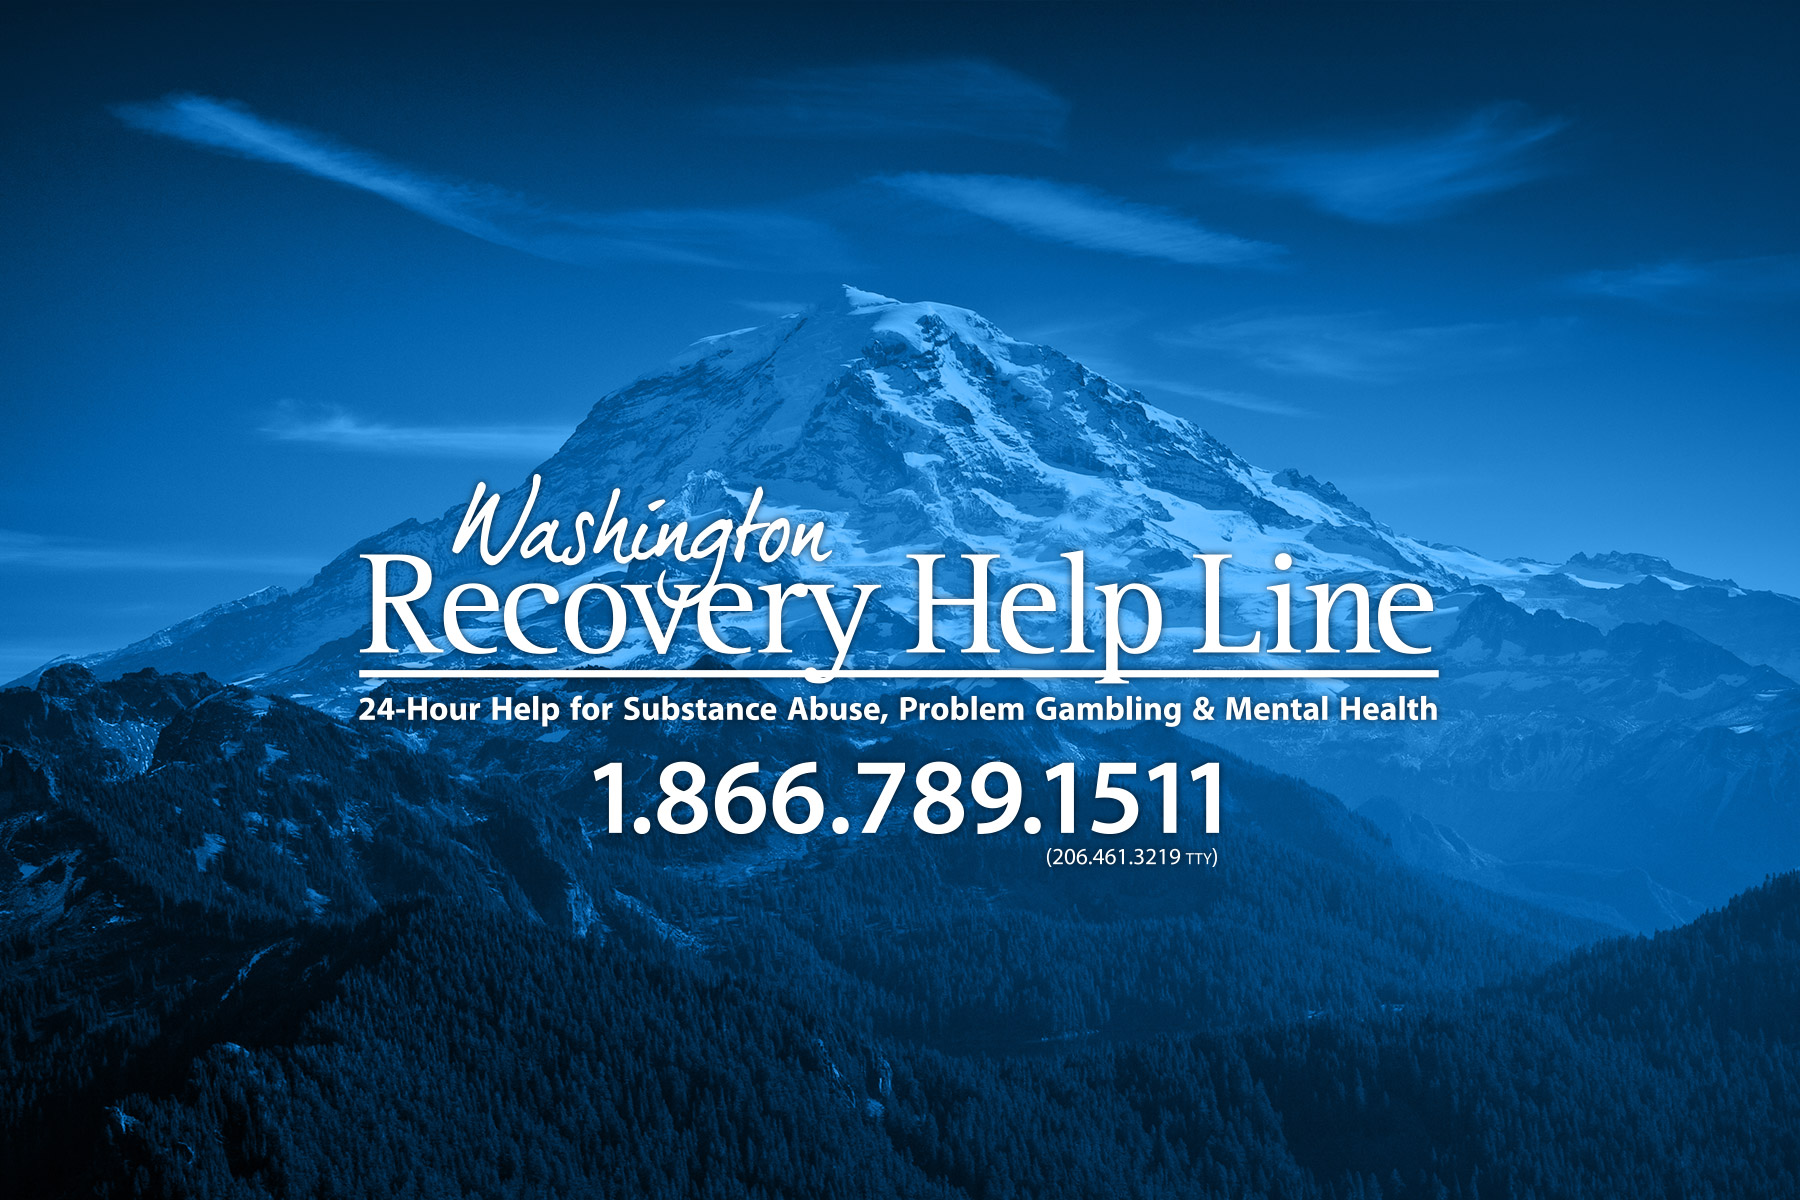 Washington Recovery Help Line